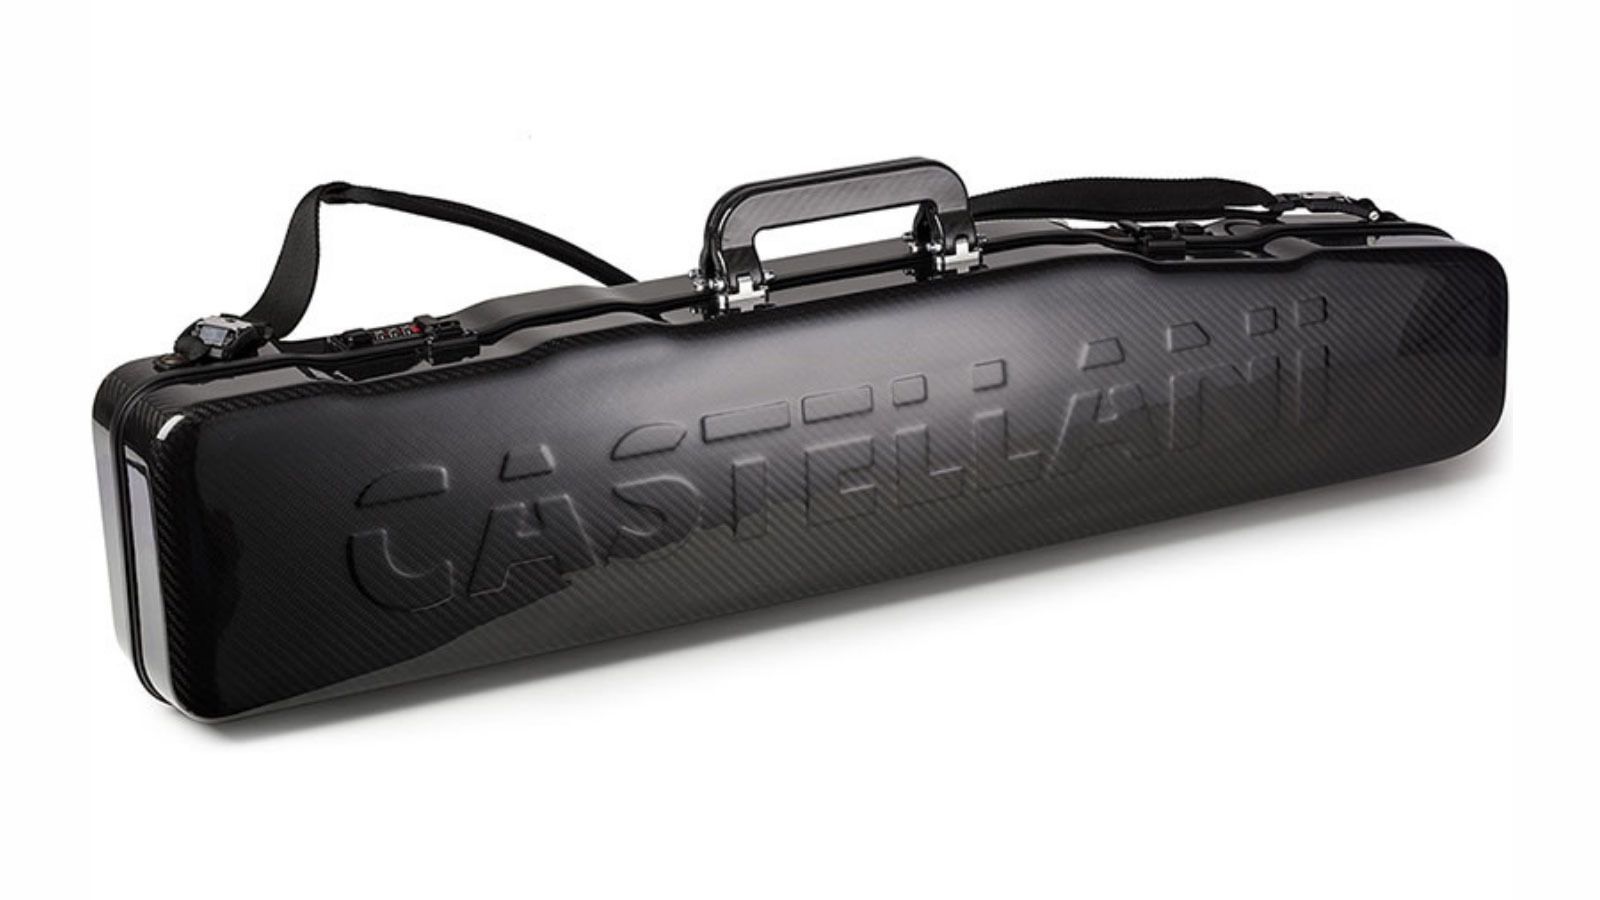 Castellani Carbon fiber shotgun case for shooting sports and hunting.